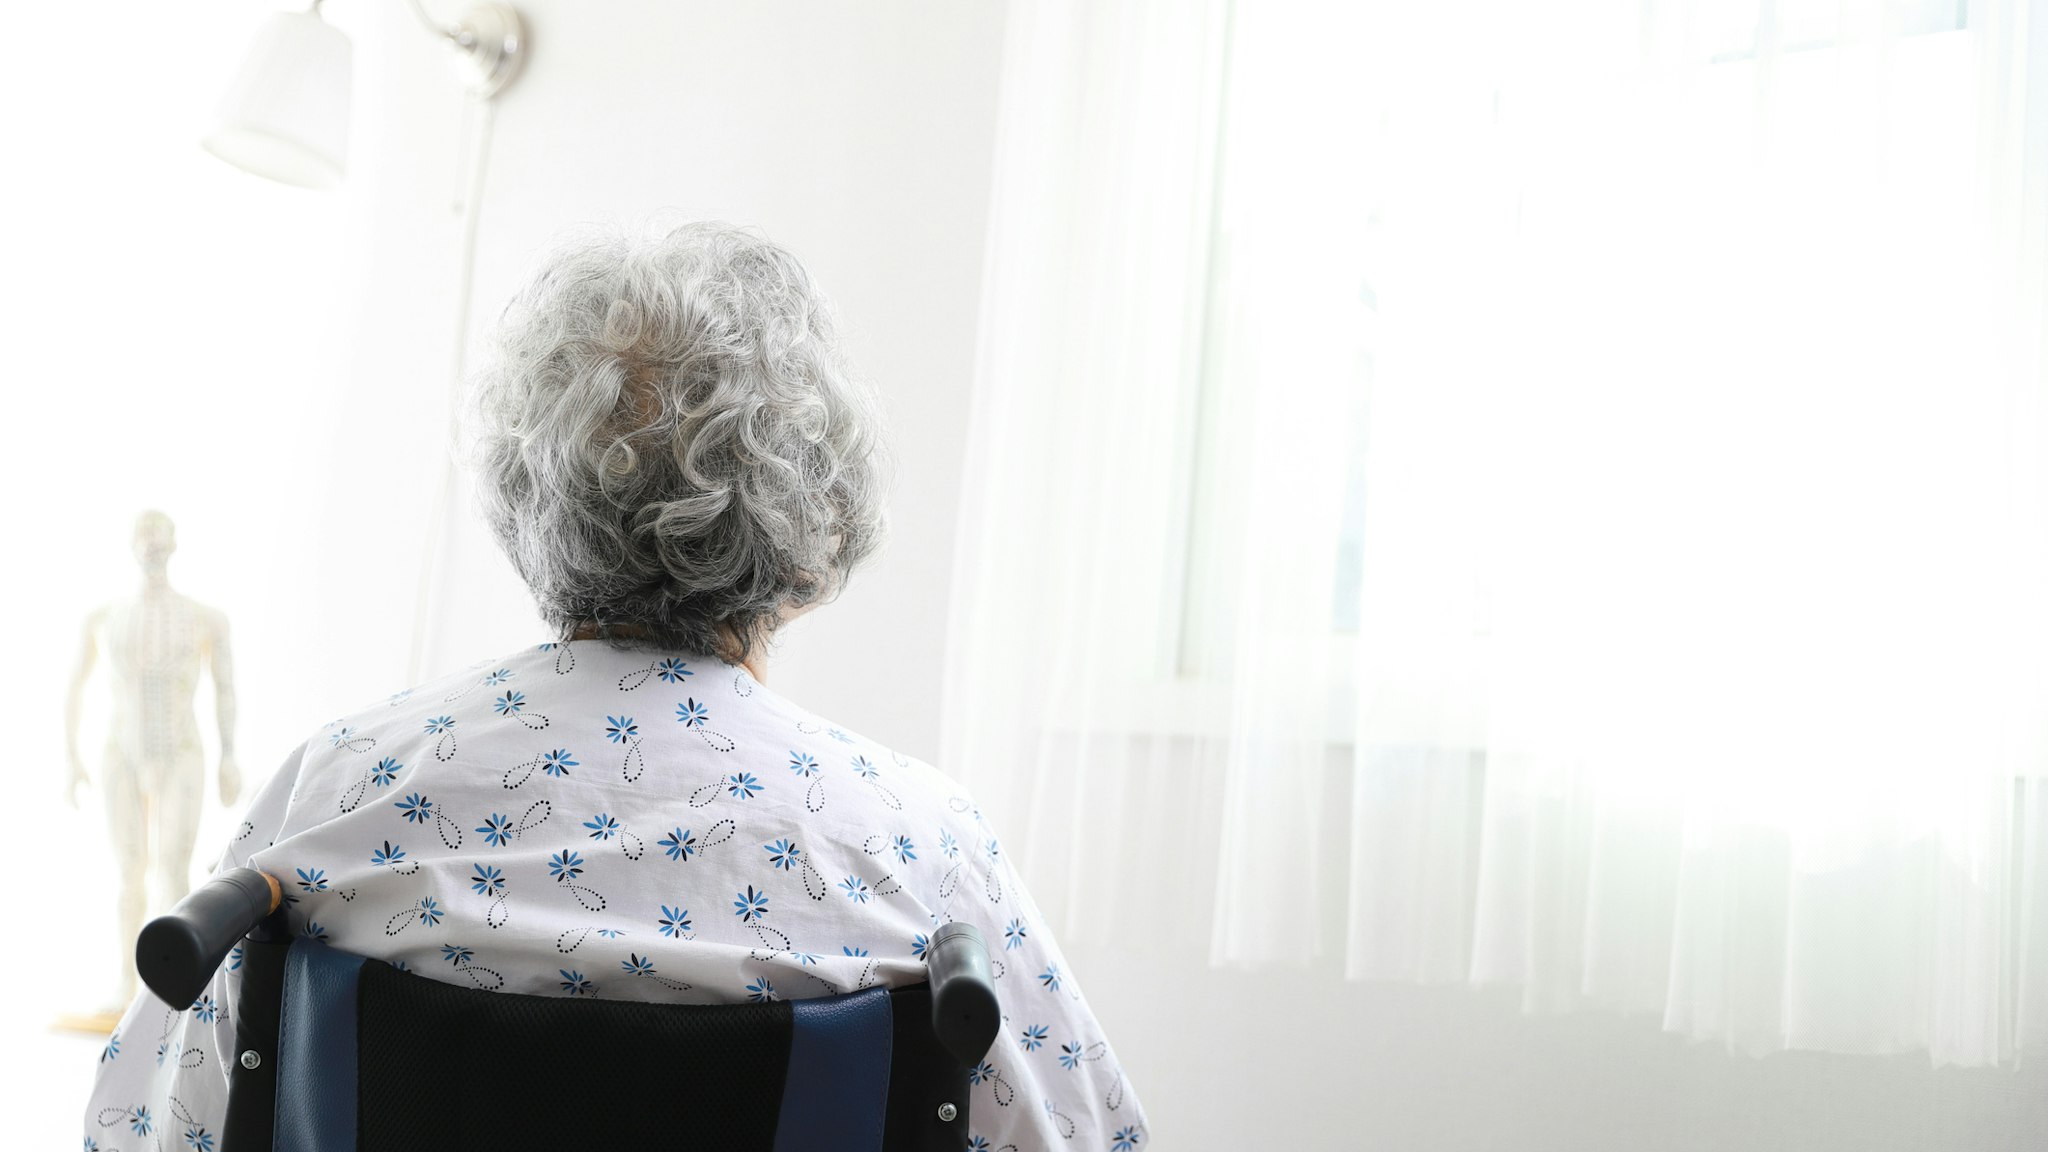 Senior woman in wheelchair,rear view - stock photo